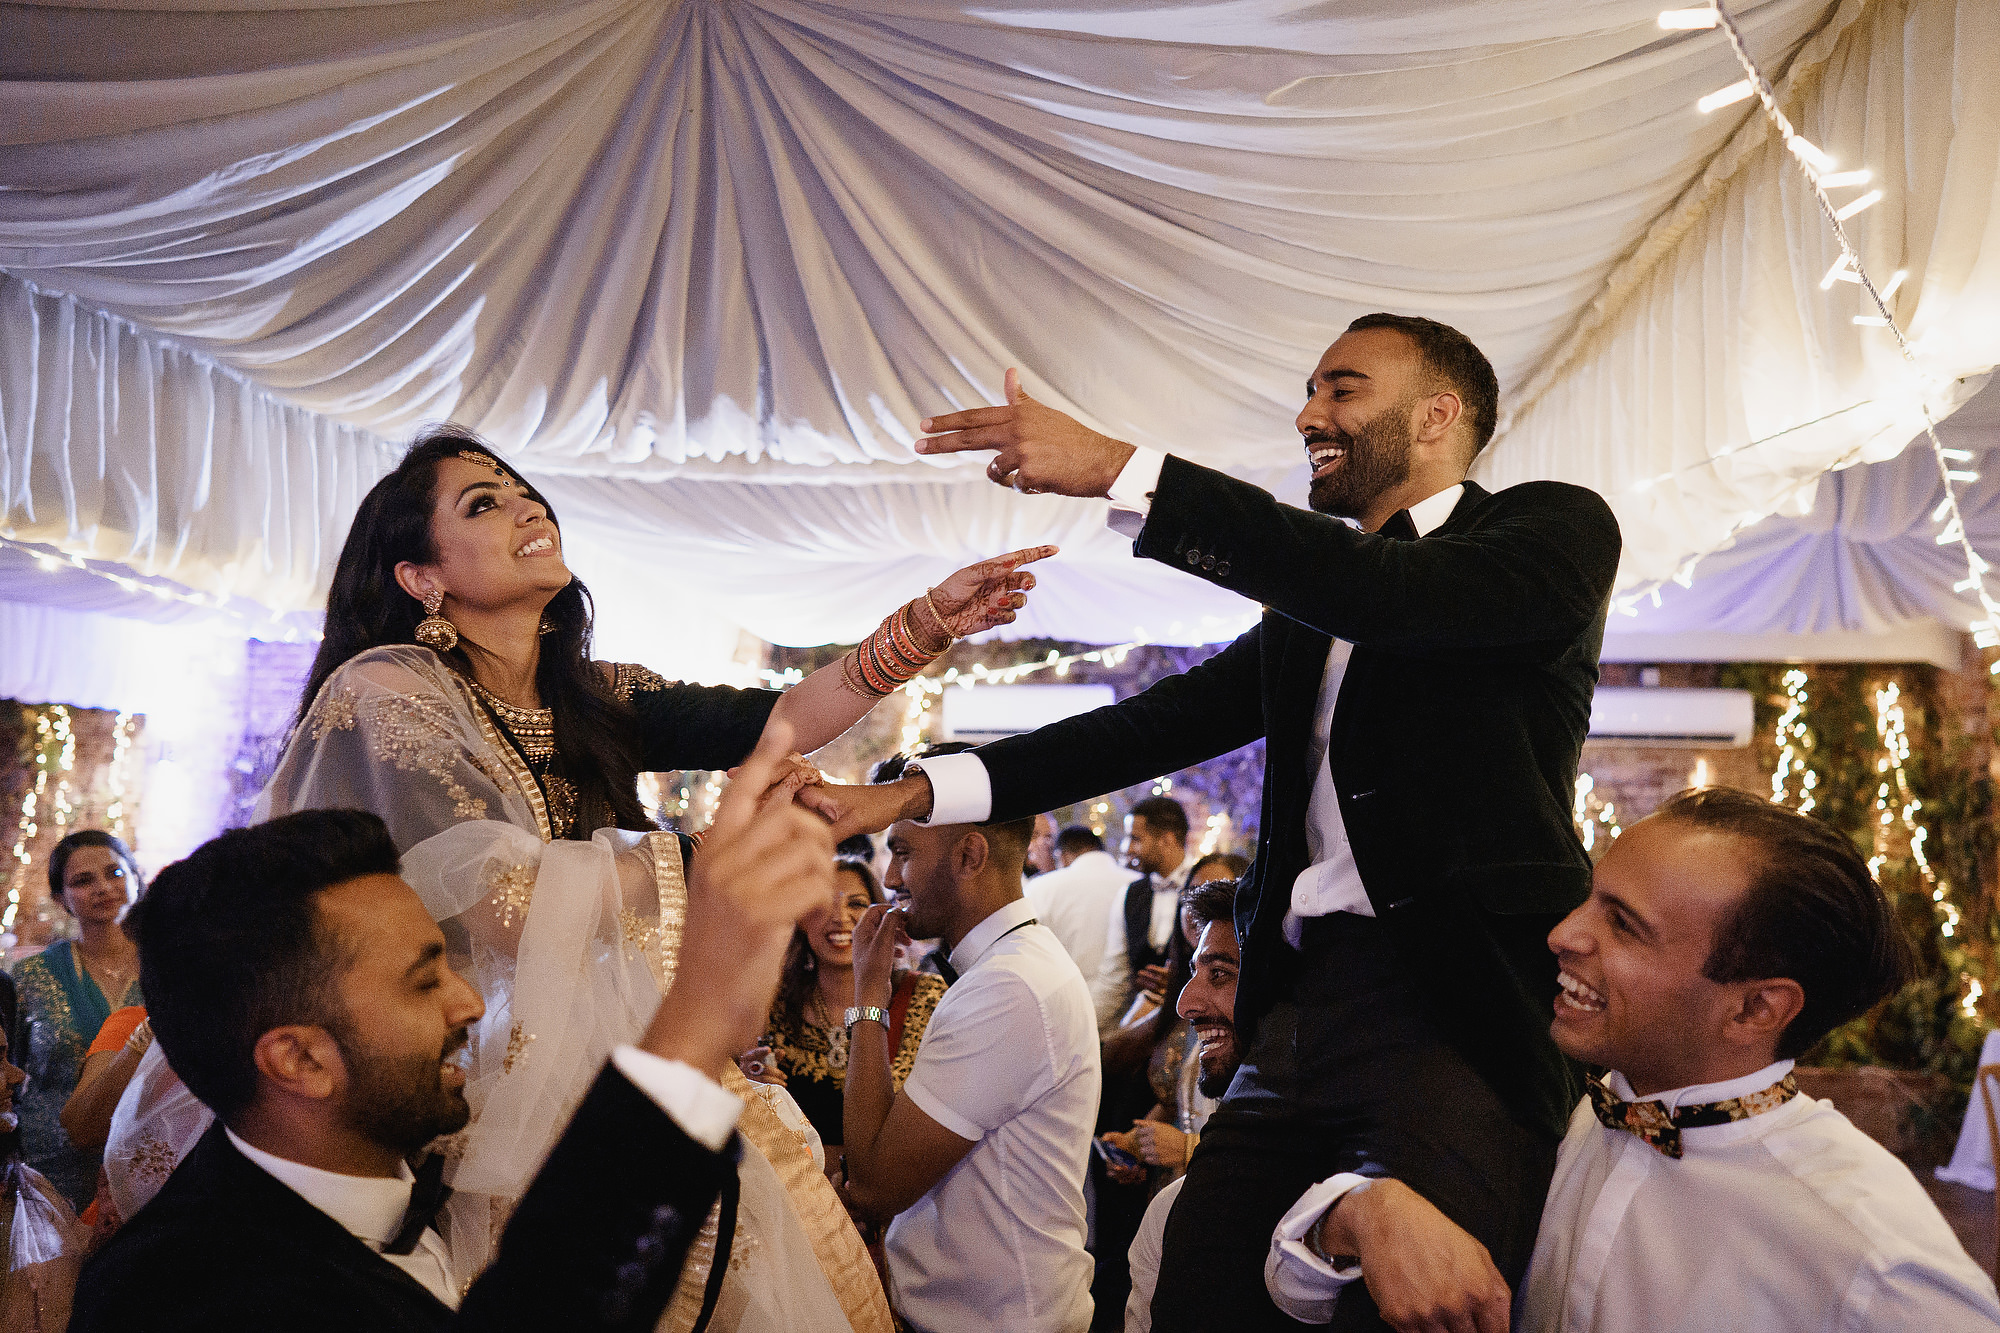 Northbrook park wedding surrey of kishan and sachna by arj photography